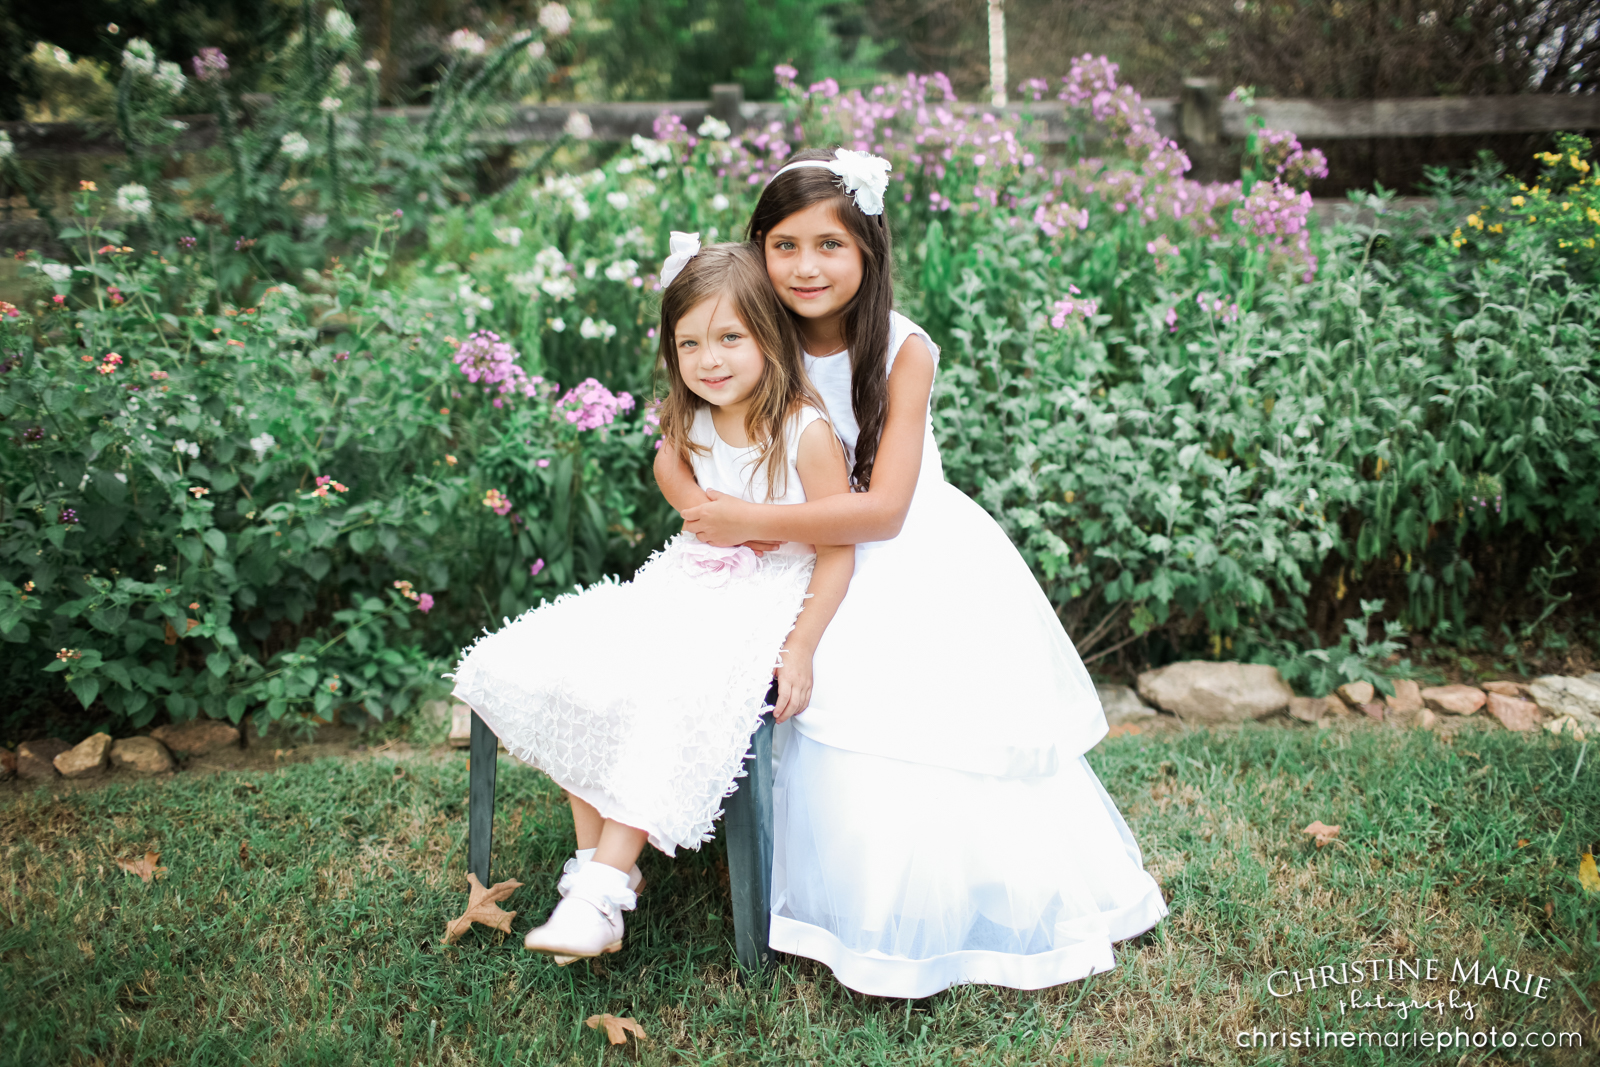 whimsical sisters portrait in flower garden and white dresses 